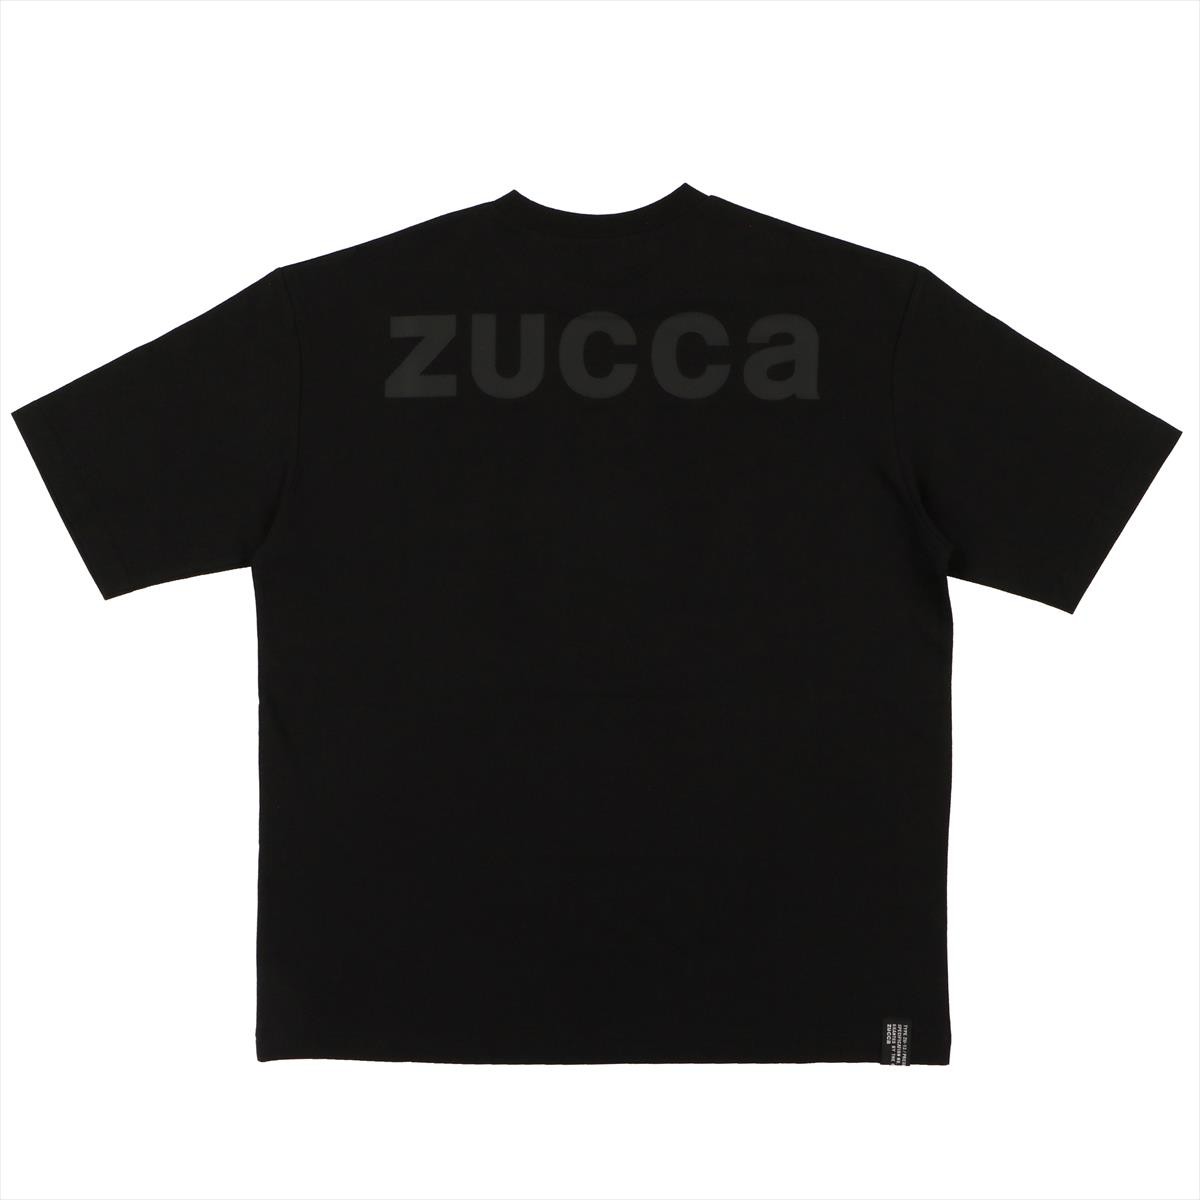 ZUCCaプロデュース商品